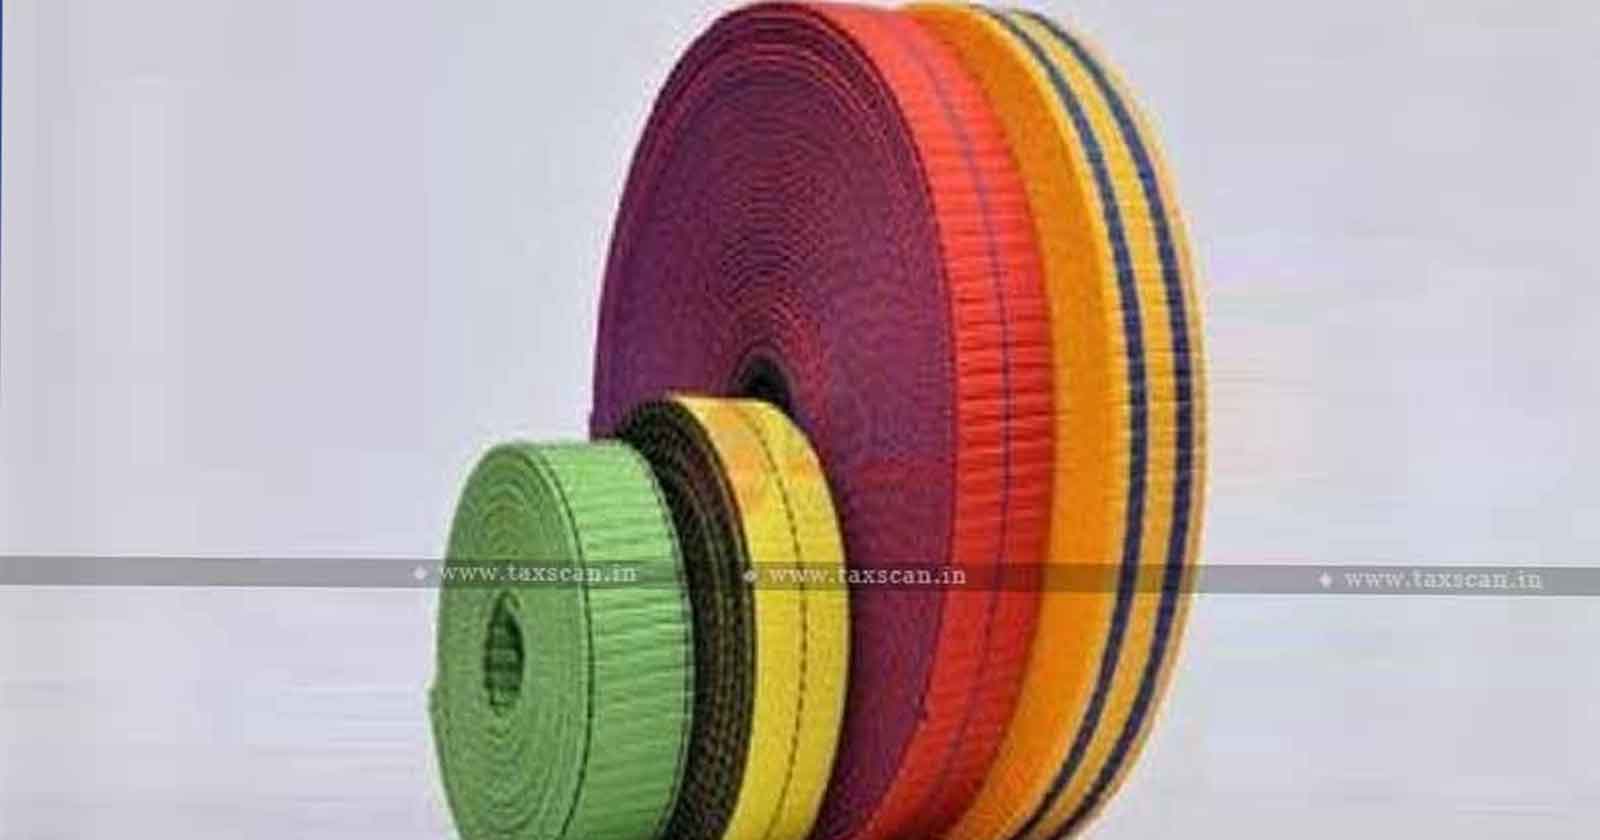 Manufacturer of polyester spun yarn - polyester spun yarn - Manufacturer - Reversal of CENVAT Credit - CENVAT Credit - CESTAT - taxscan